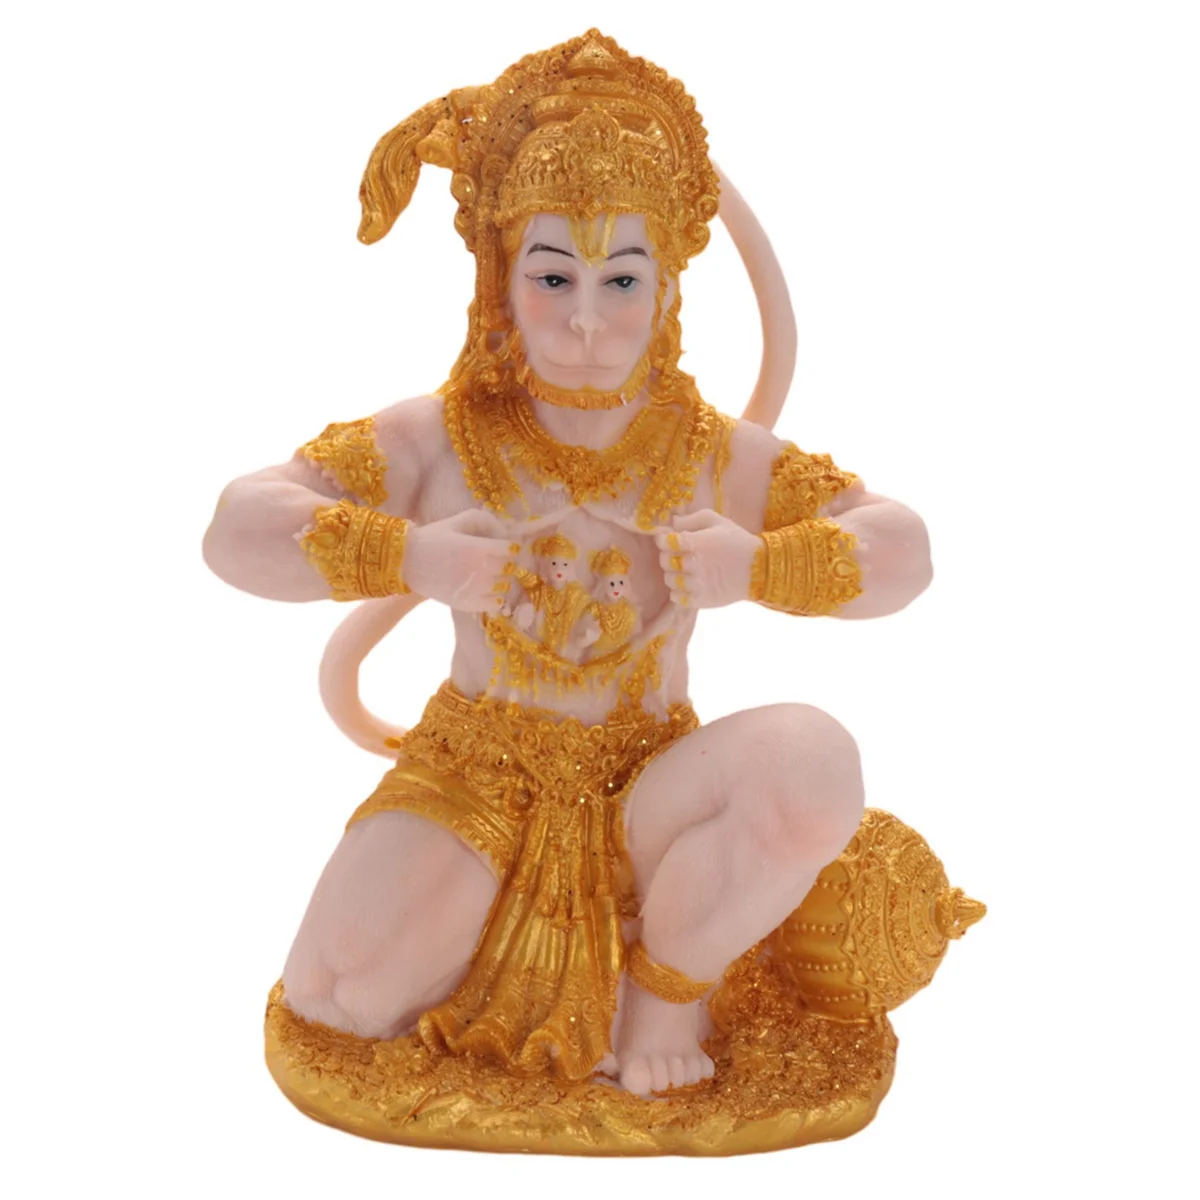 

Gold Hanuman Statue Indian Lord Sculpture India Figurine Collection Idol Murti Pooja Sculpture for Decor Ornament